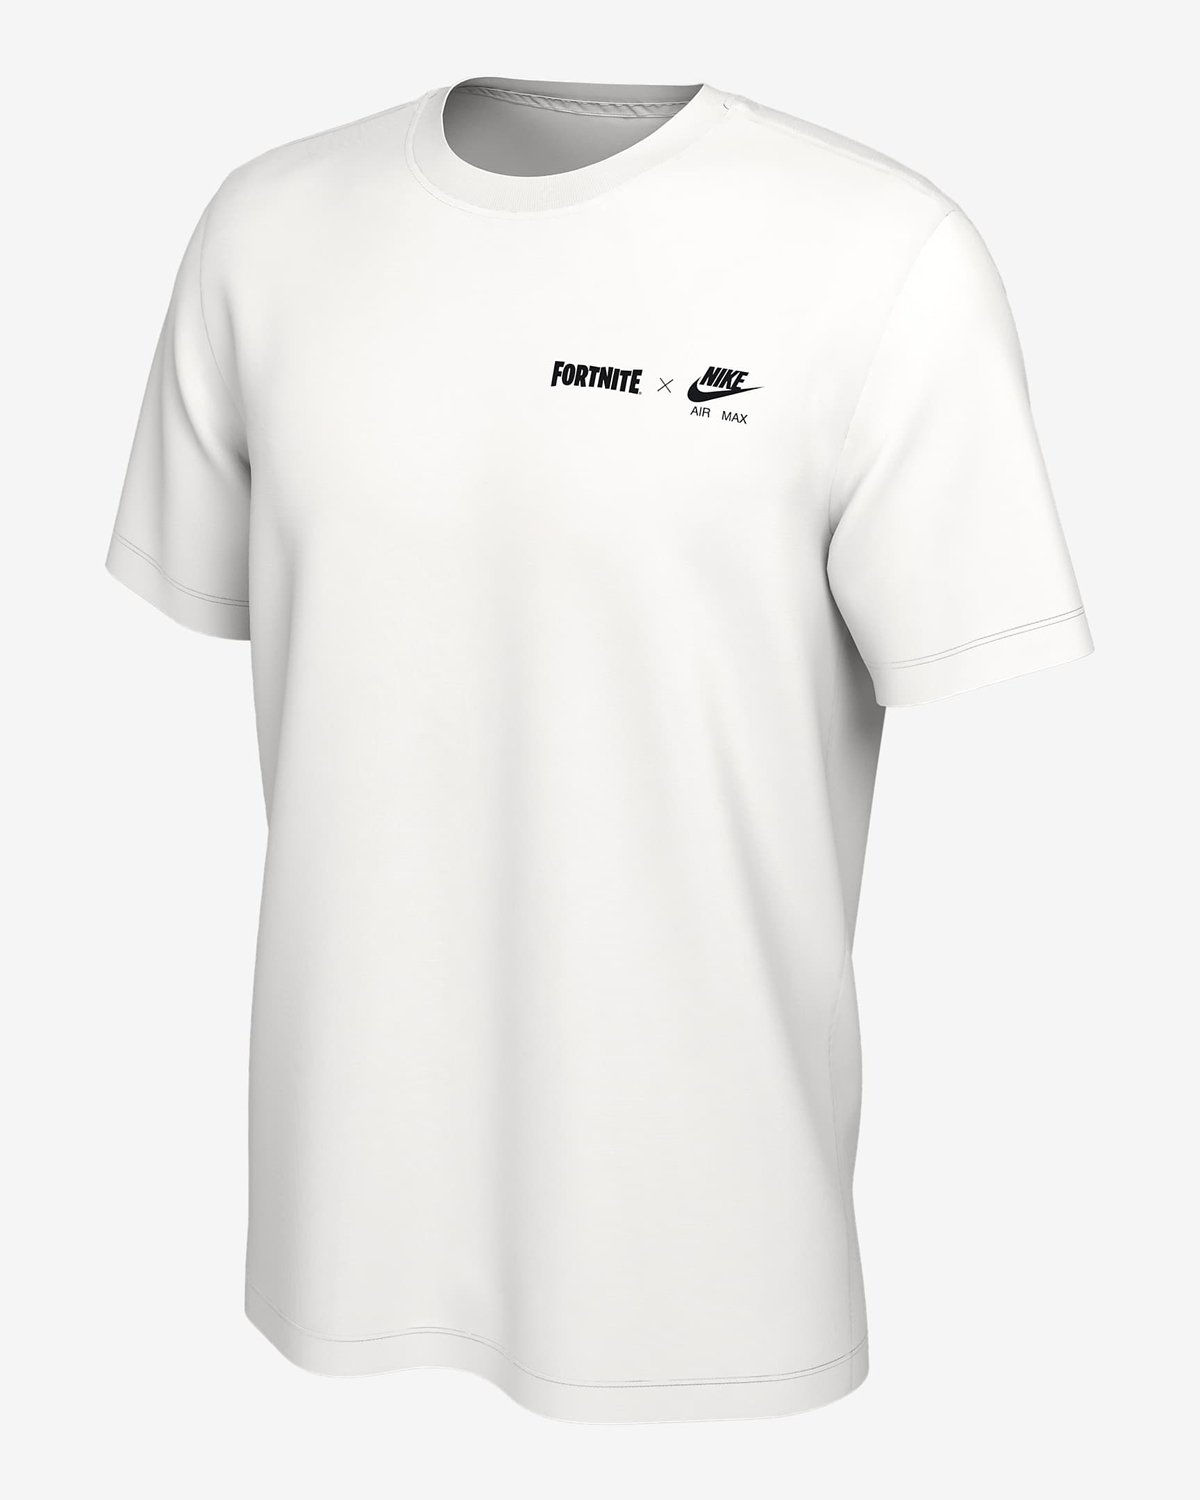 Nike-Fortnite-Air-Max-T-Shirt-White